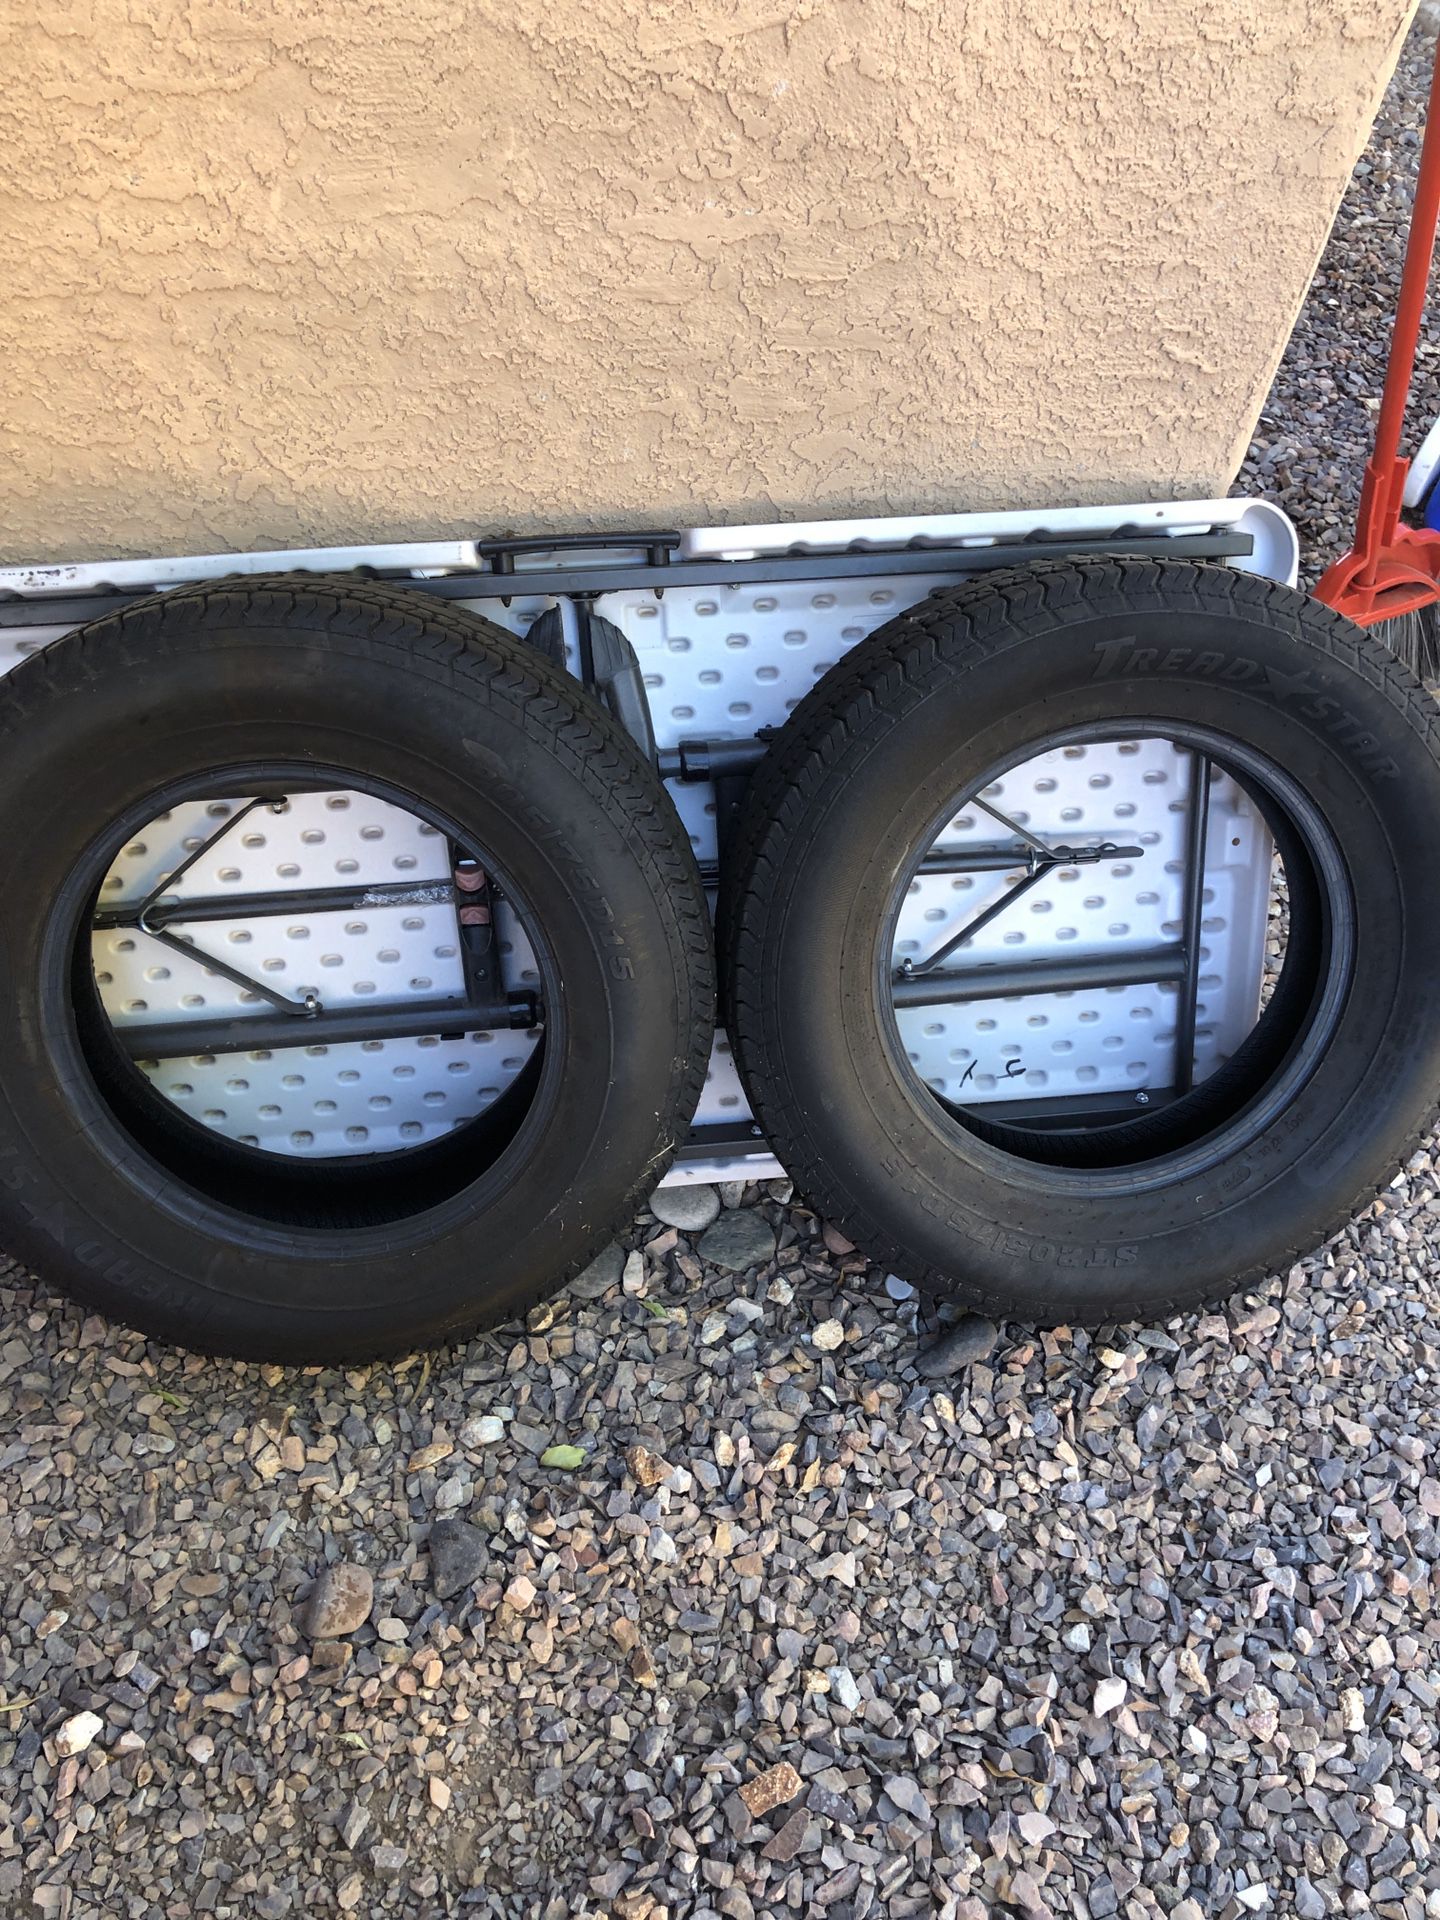 Trailer tires